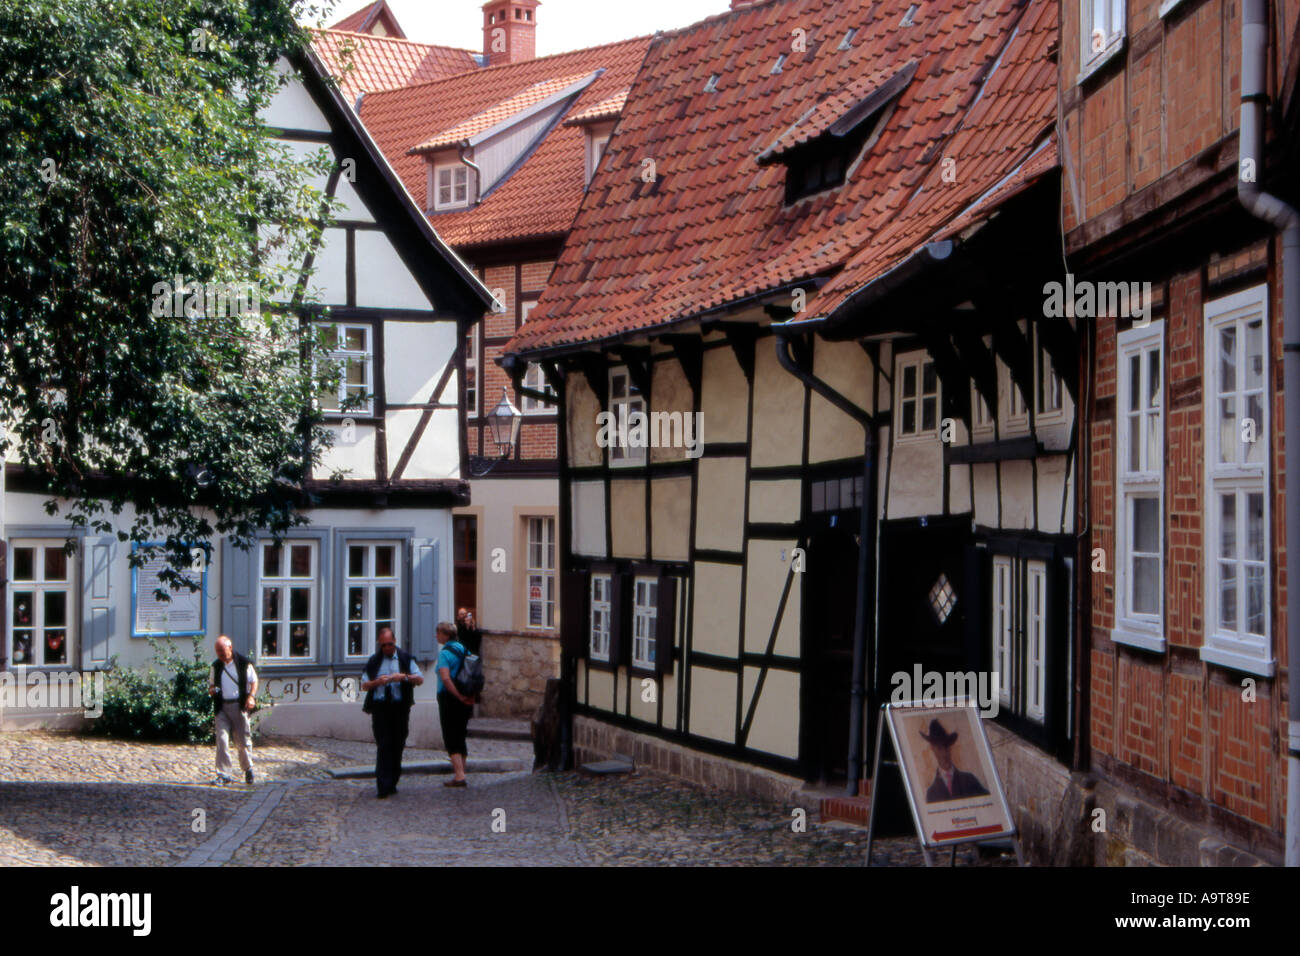 Medieval street in Quedlinburg Sachsen Anhalt Germany Stock Photo